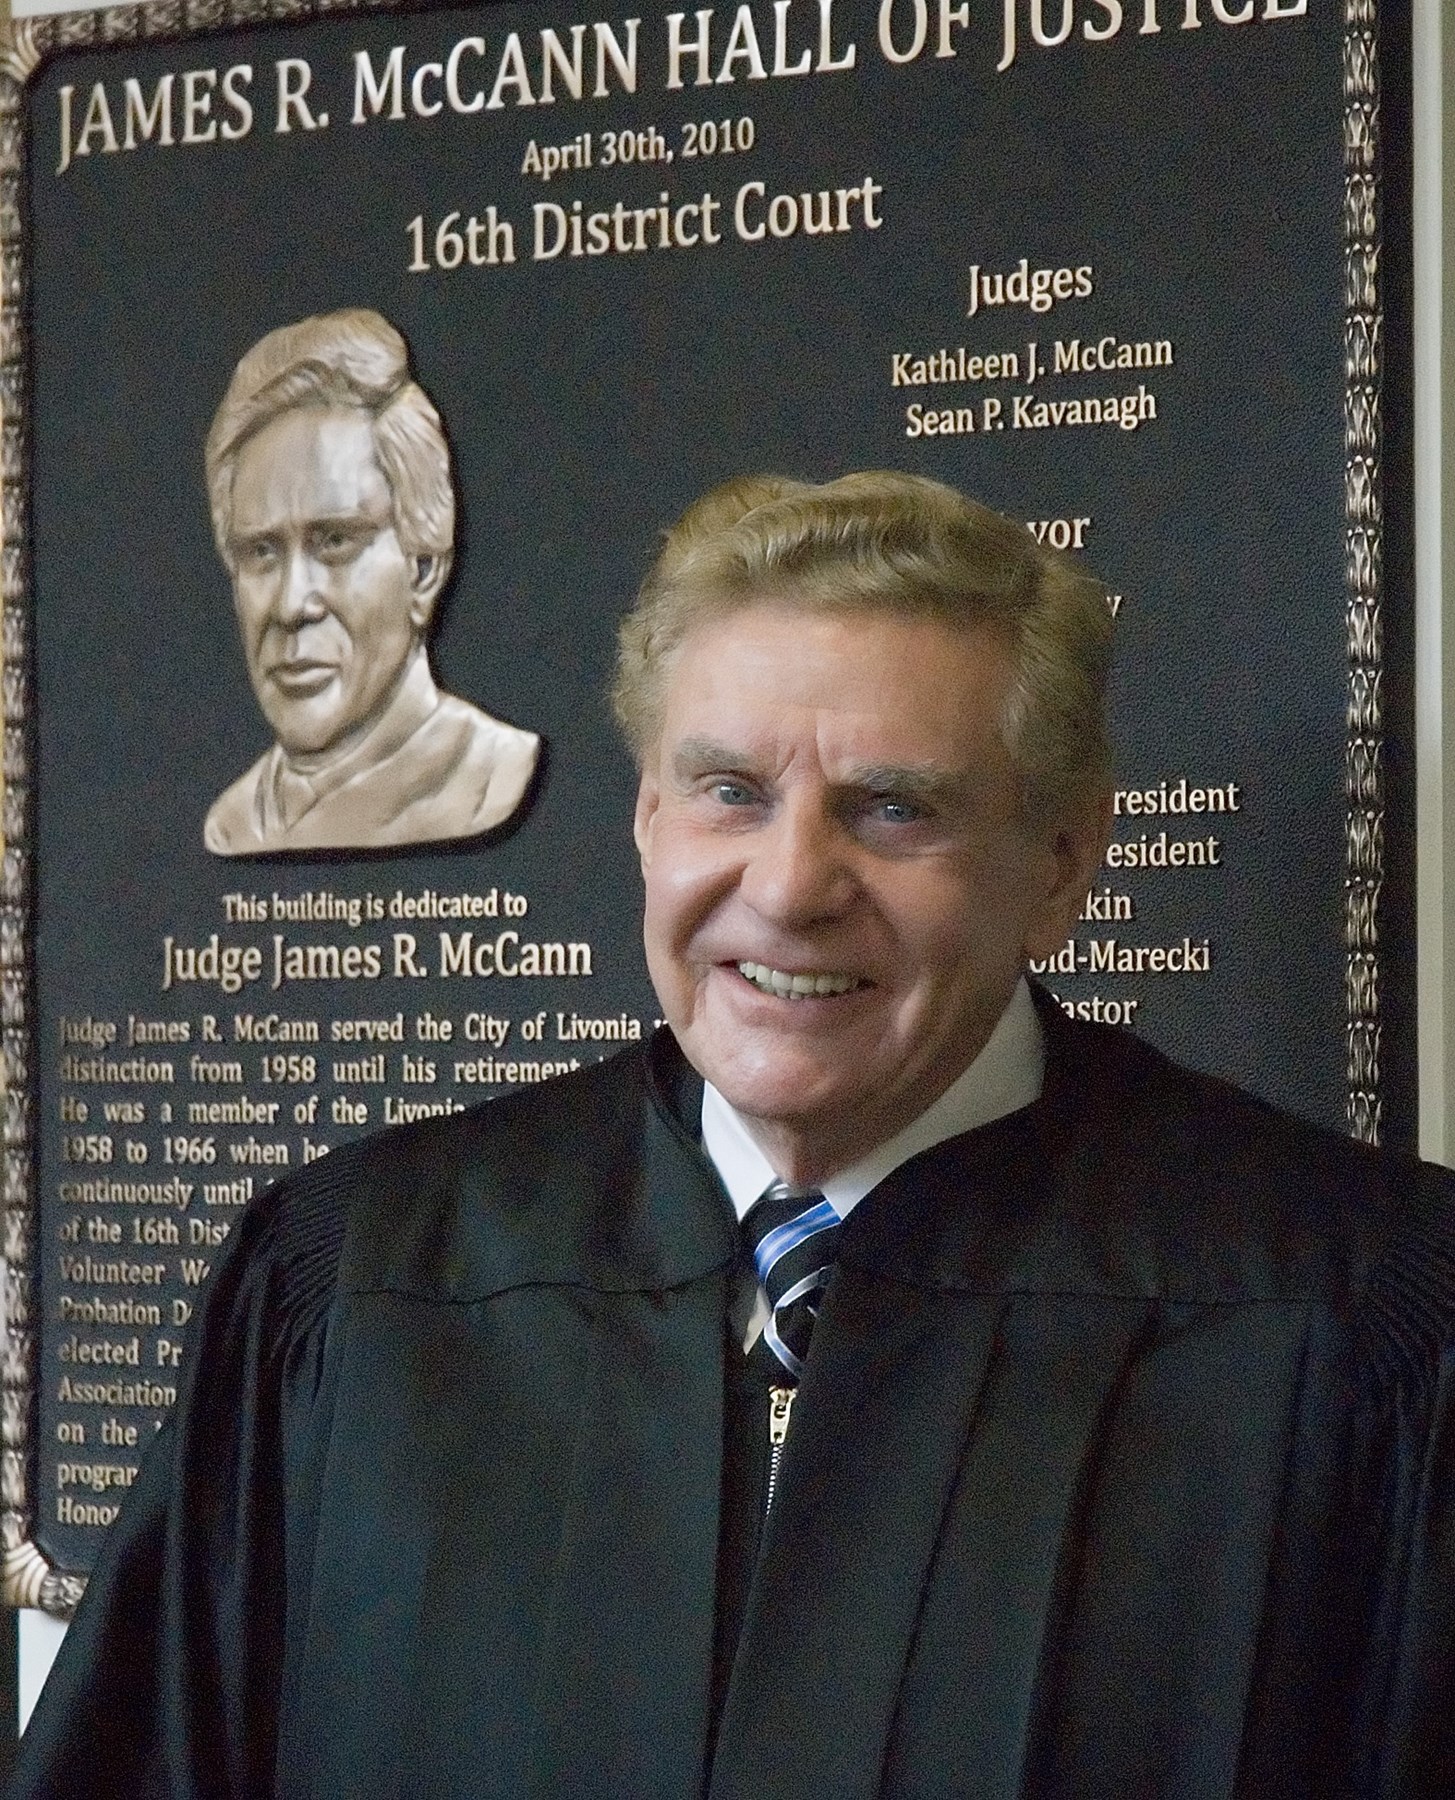 Judge James R. McCann